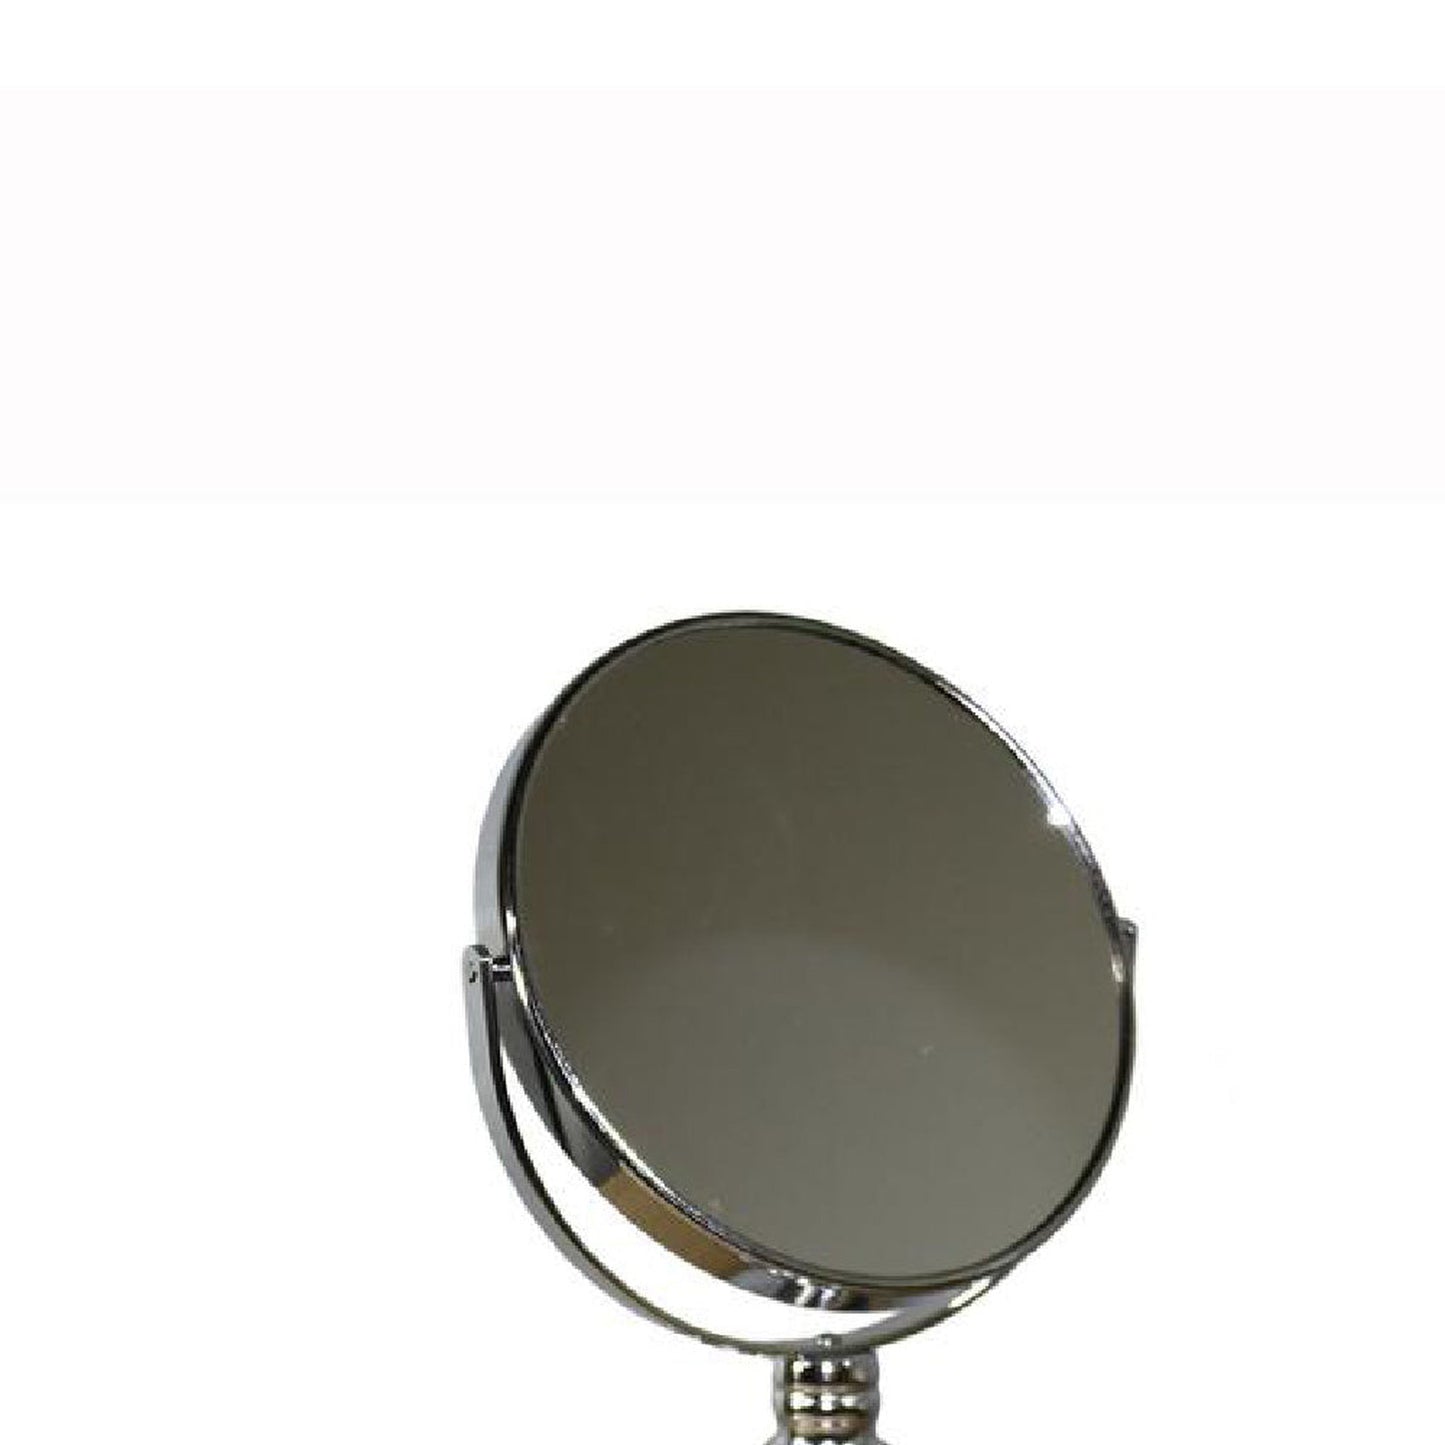 Benzara Silver Metal Magnifying Makeup Mirror With 3X Magnification